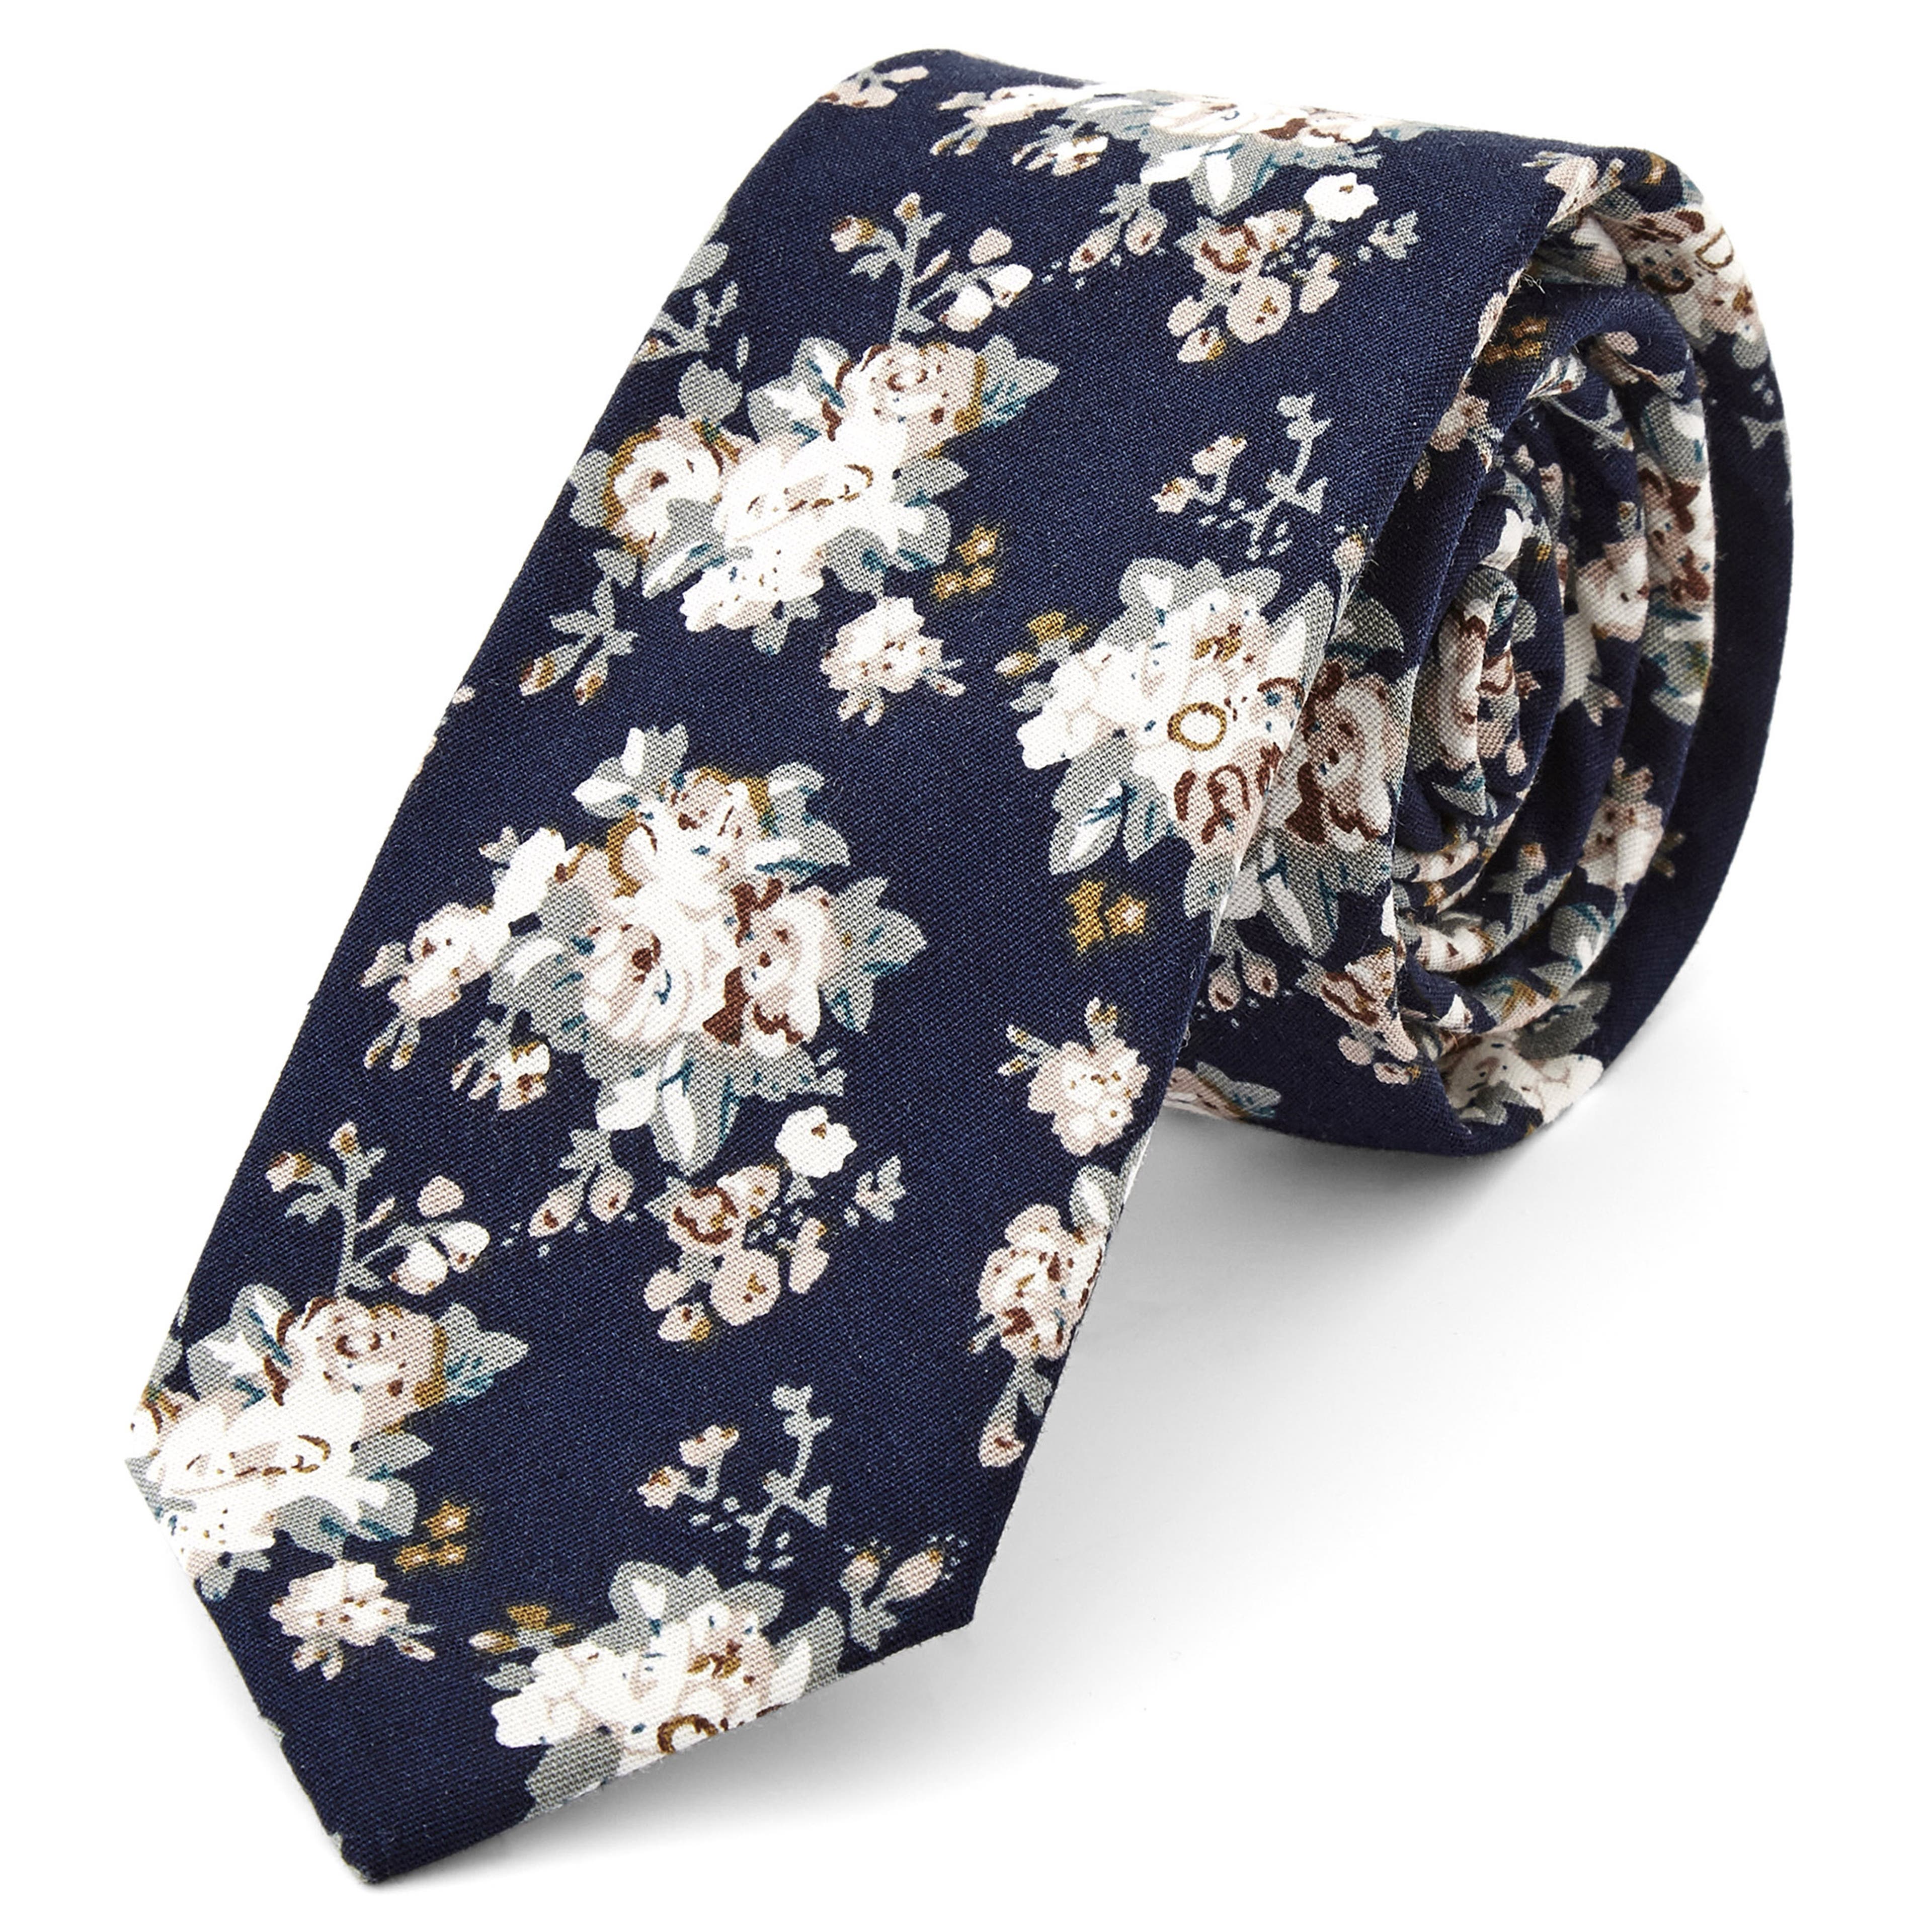 Cravatta floreale blu e bianca